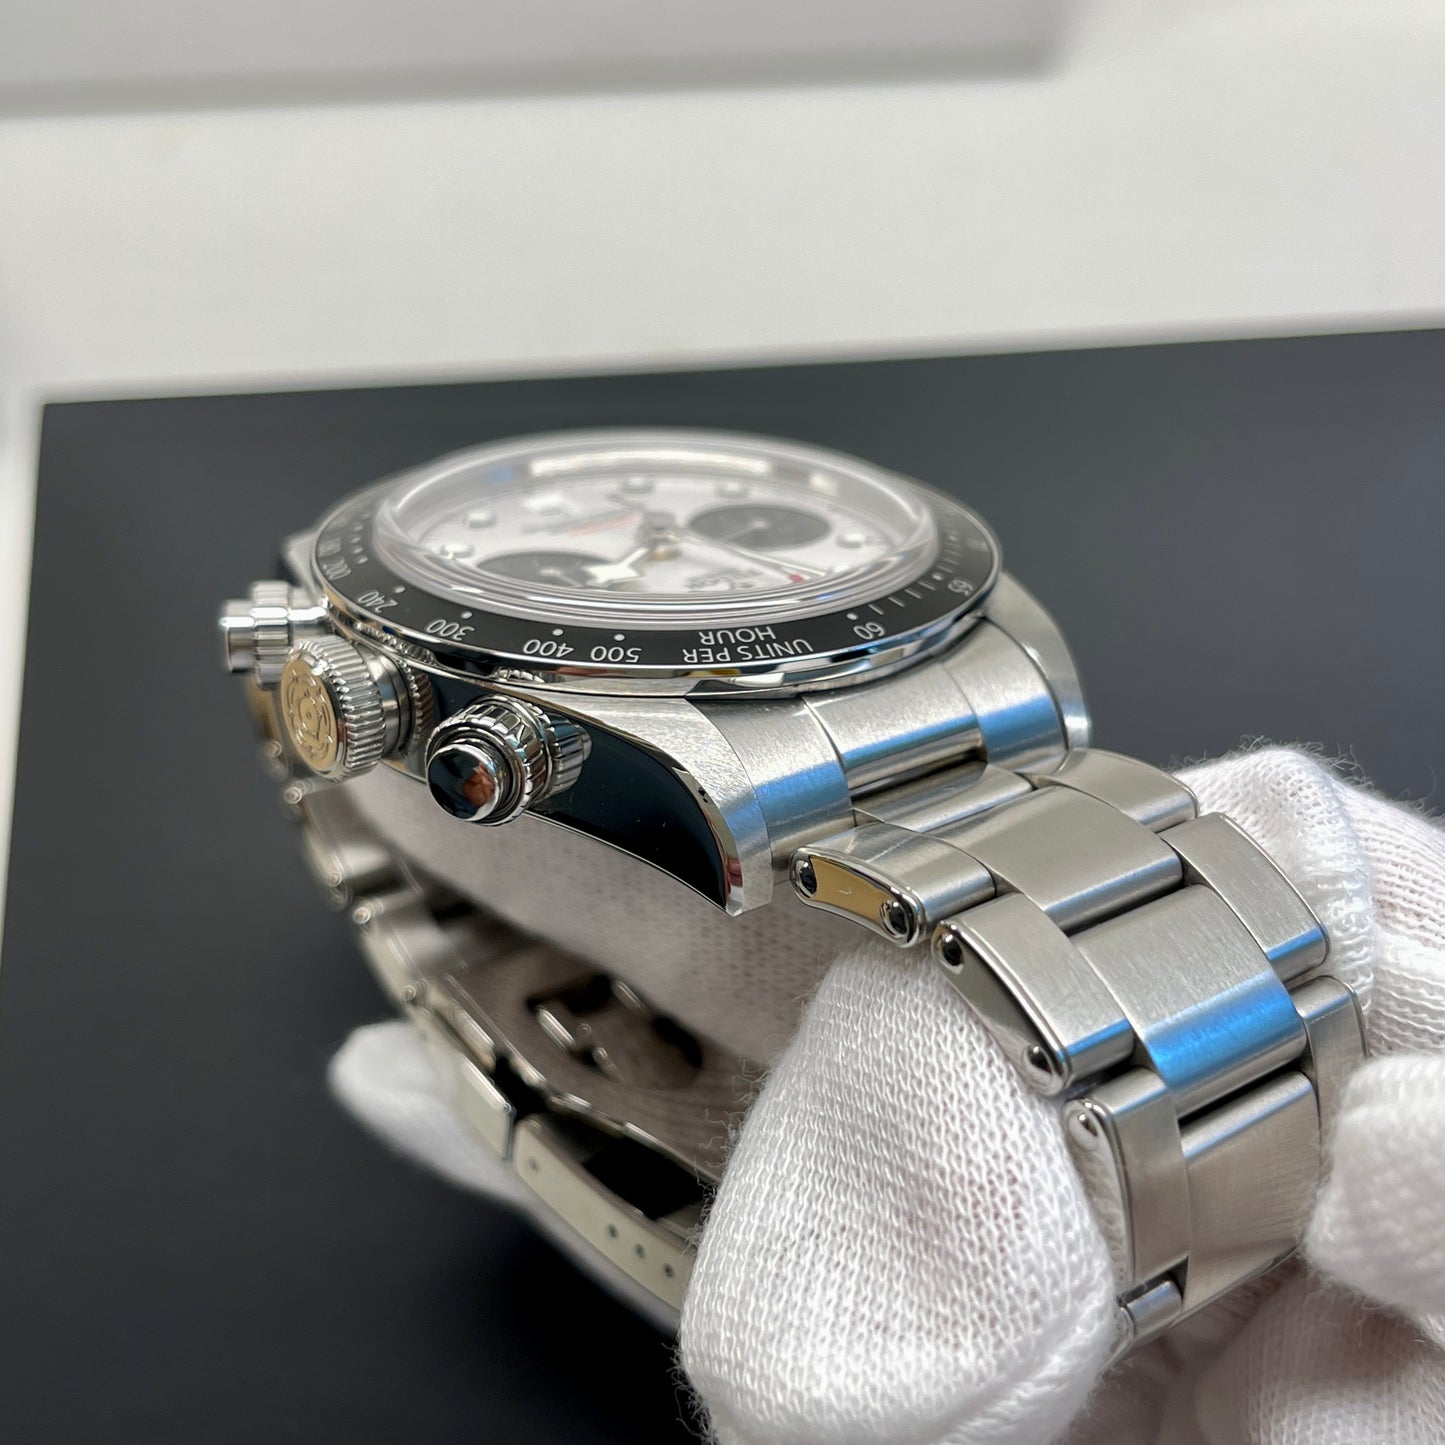 2021 Tudor Heritage Black Bay 79360N White Panda Chronograph Automatic Wristwatch Box Papers - Hashtag Watch Company